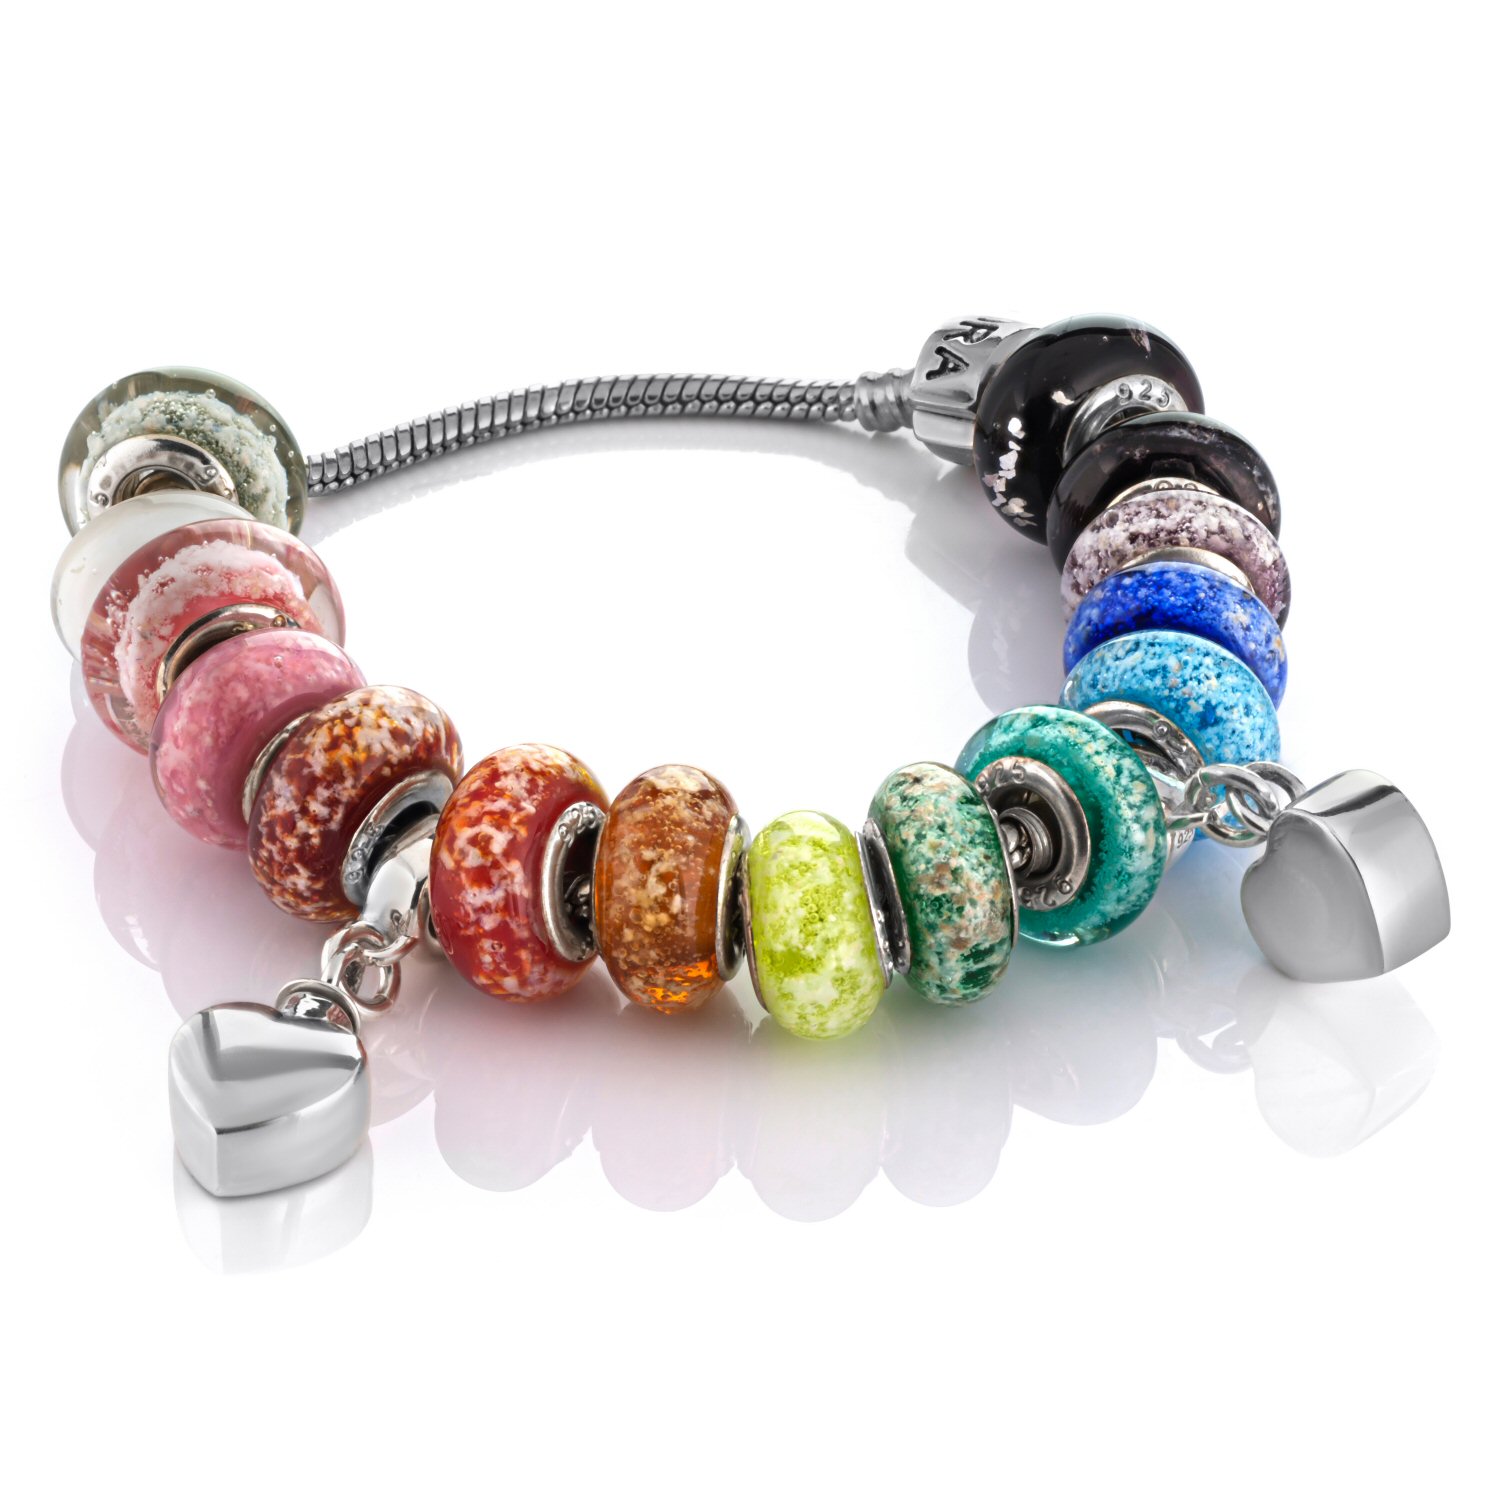 Pandora-style Charm beads